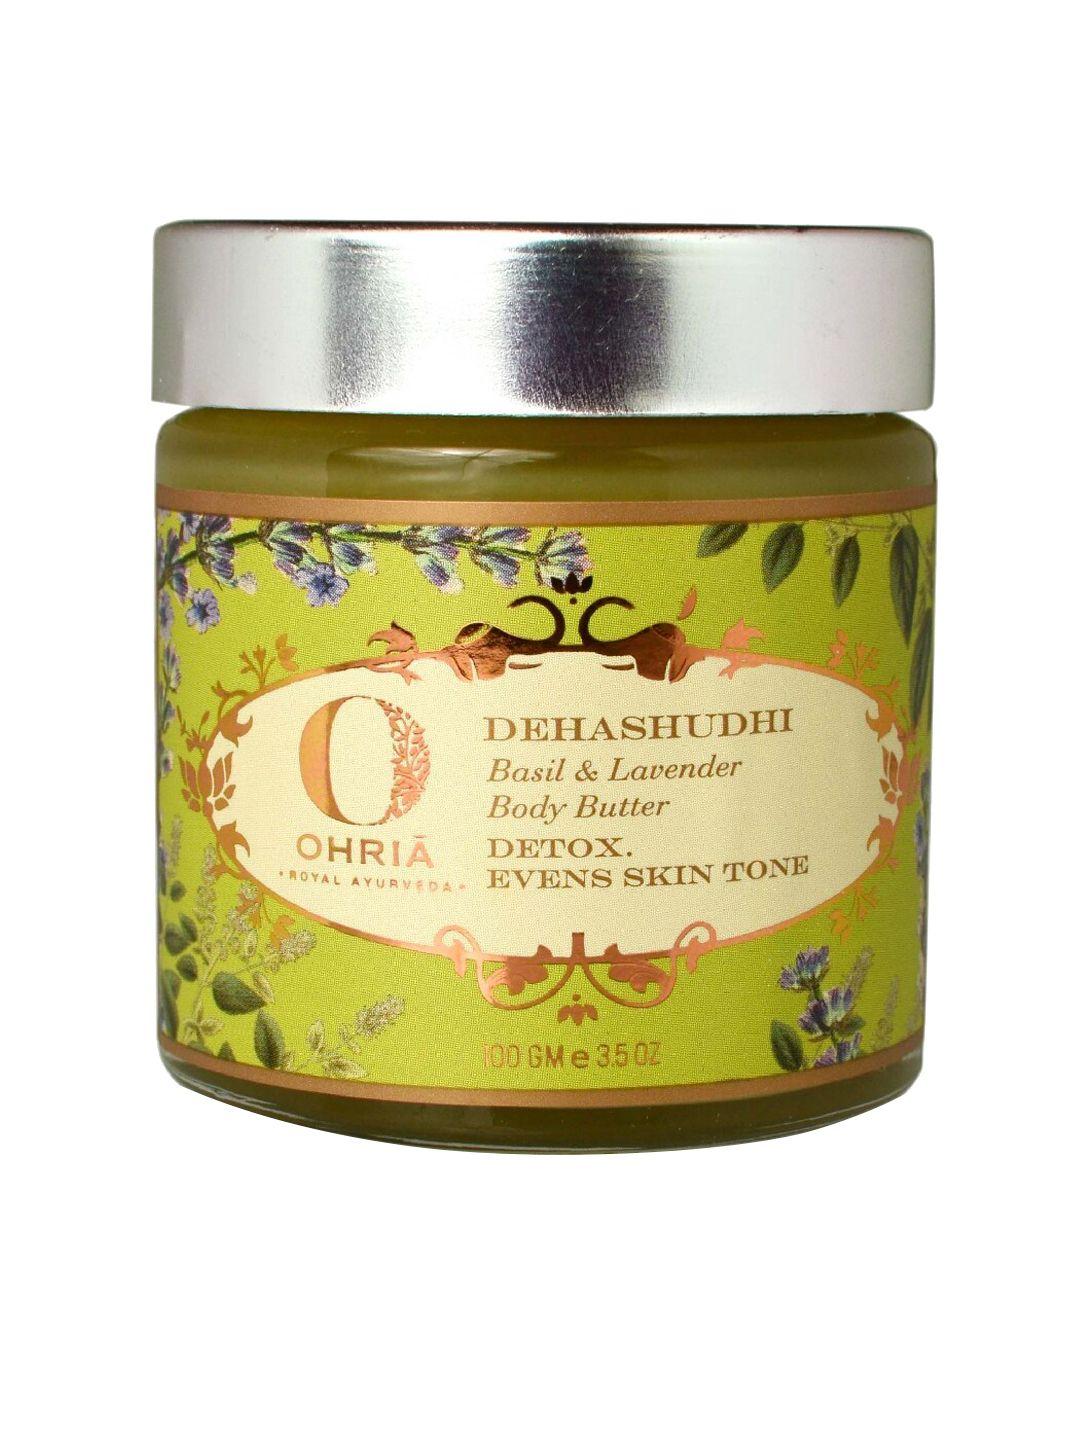 ohria ayurveda dehashudhi basil & lavender body butter 100 g